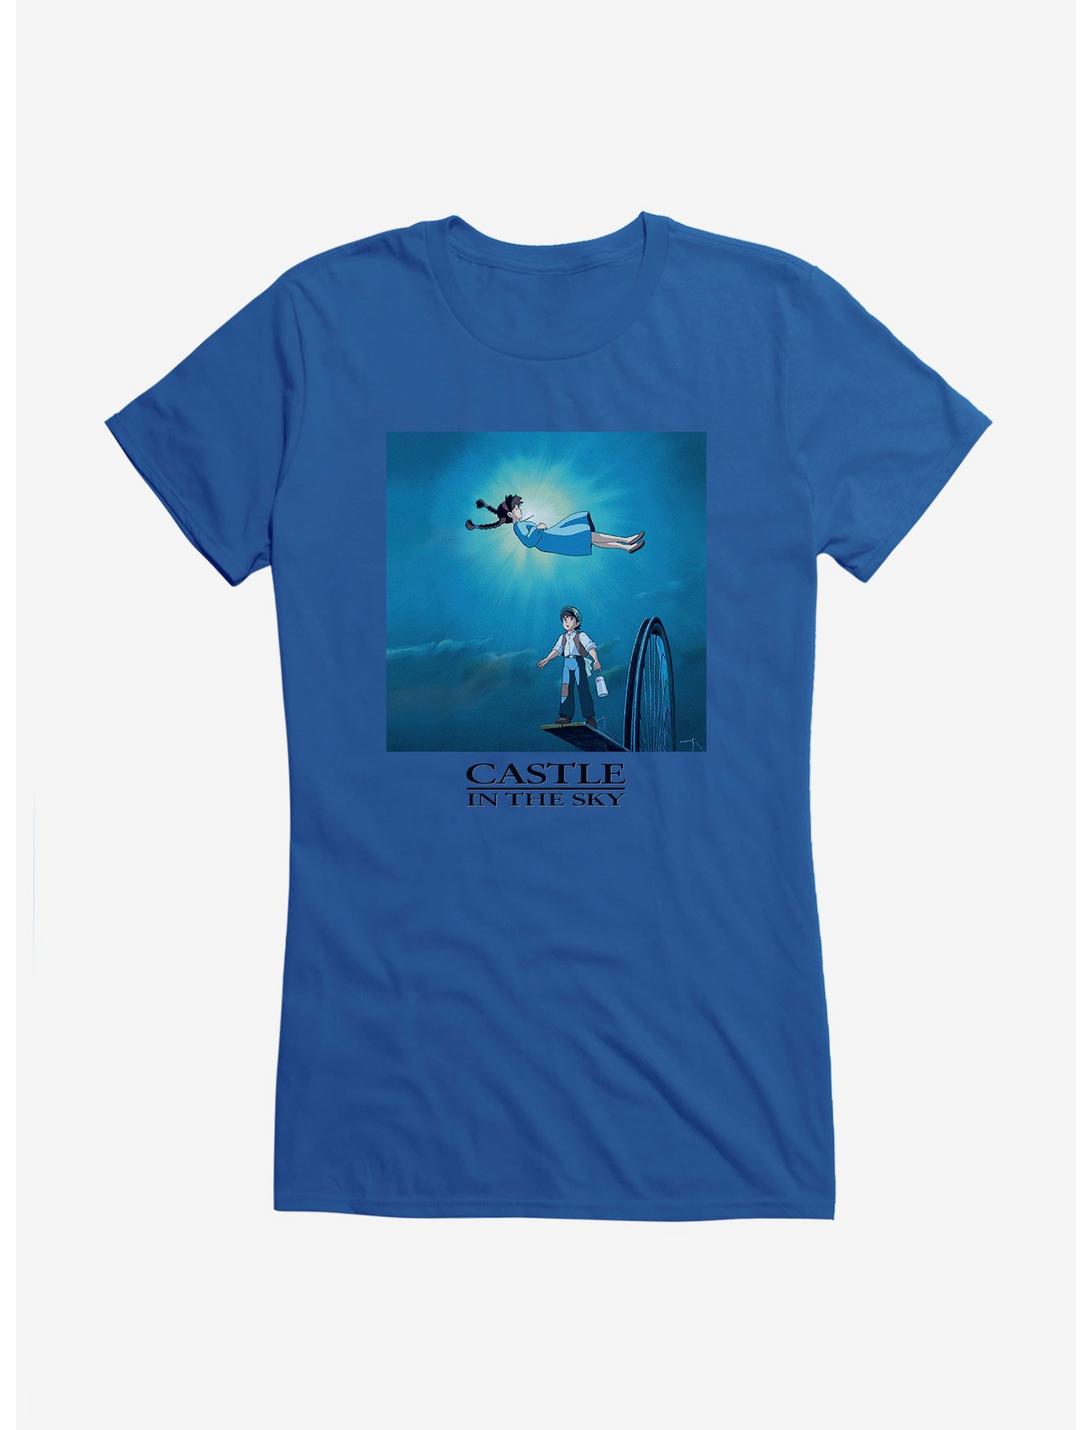 Studio Ghibli Castle In The Sky Poster Art Girls T-Shirt, ROYAL, hi-res